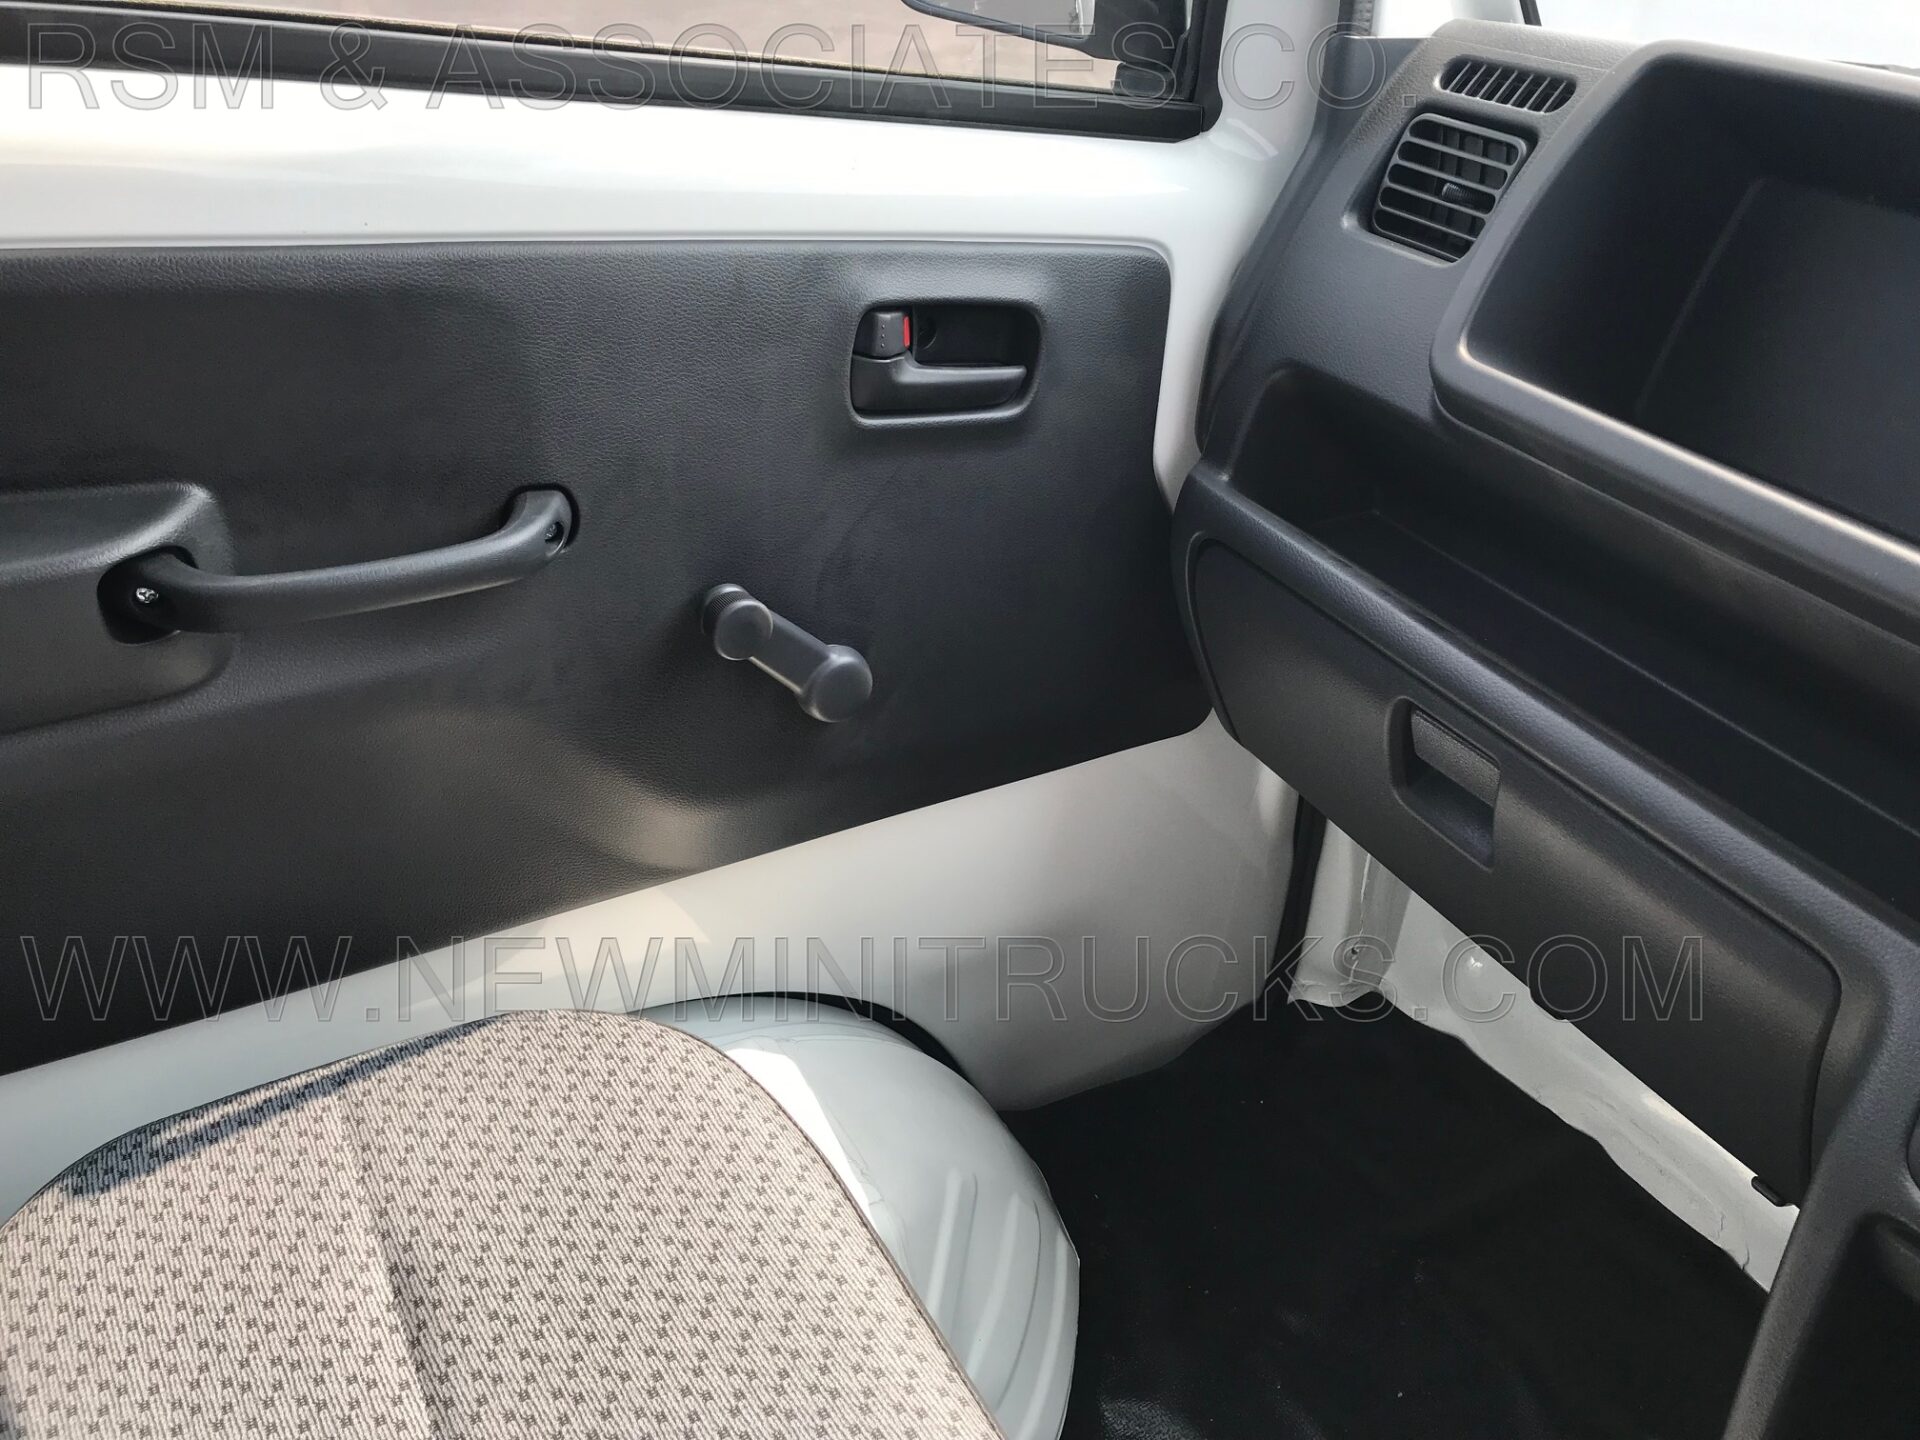 inside a vehicle